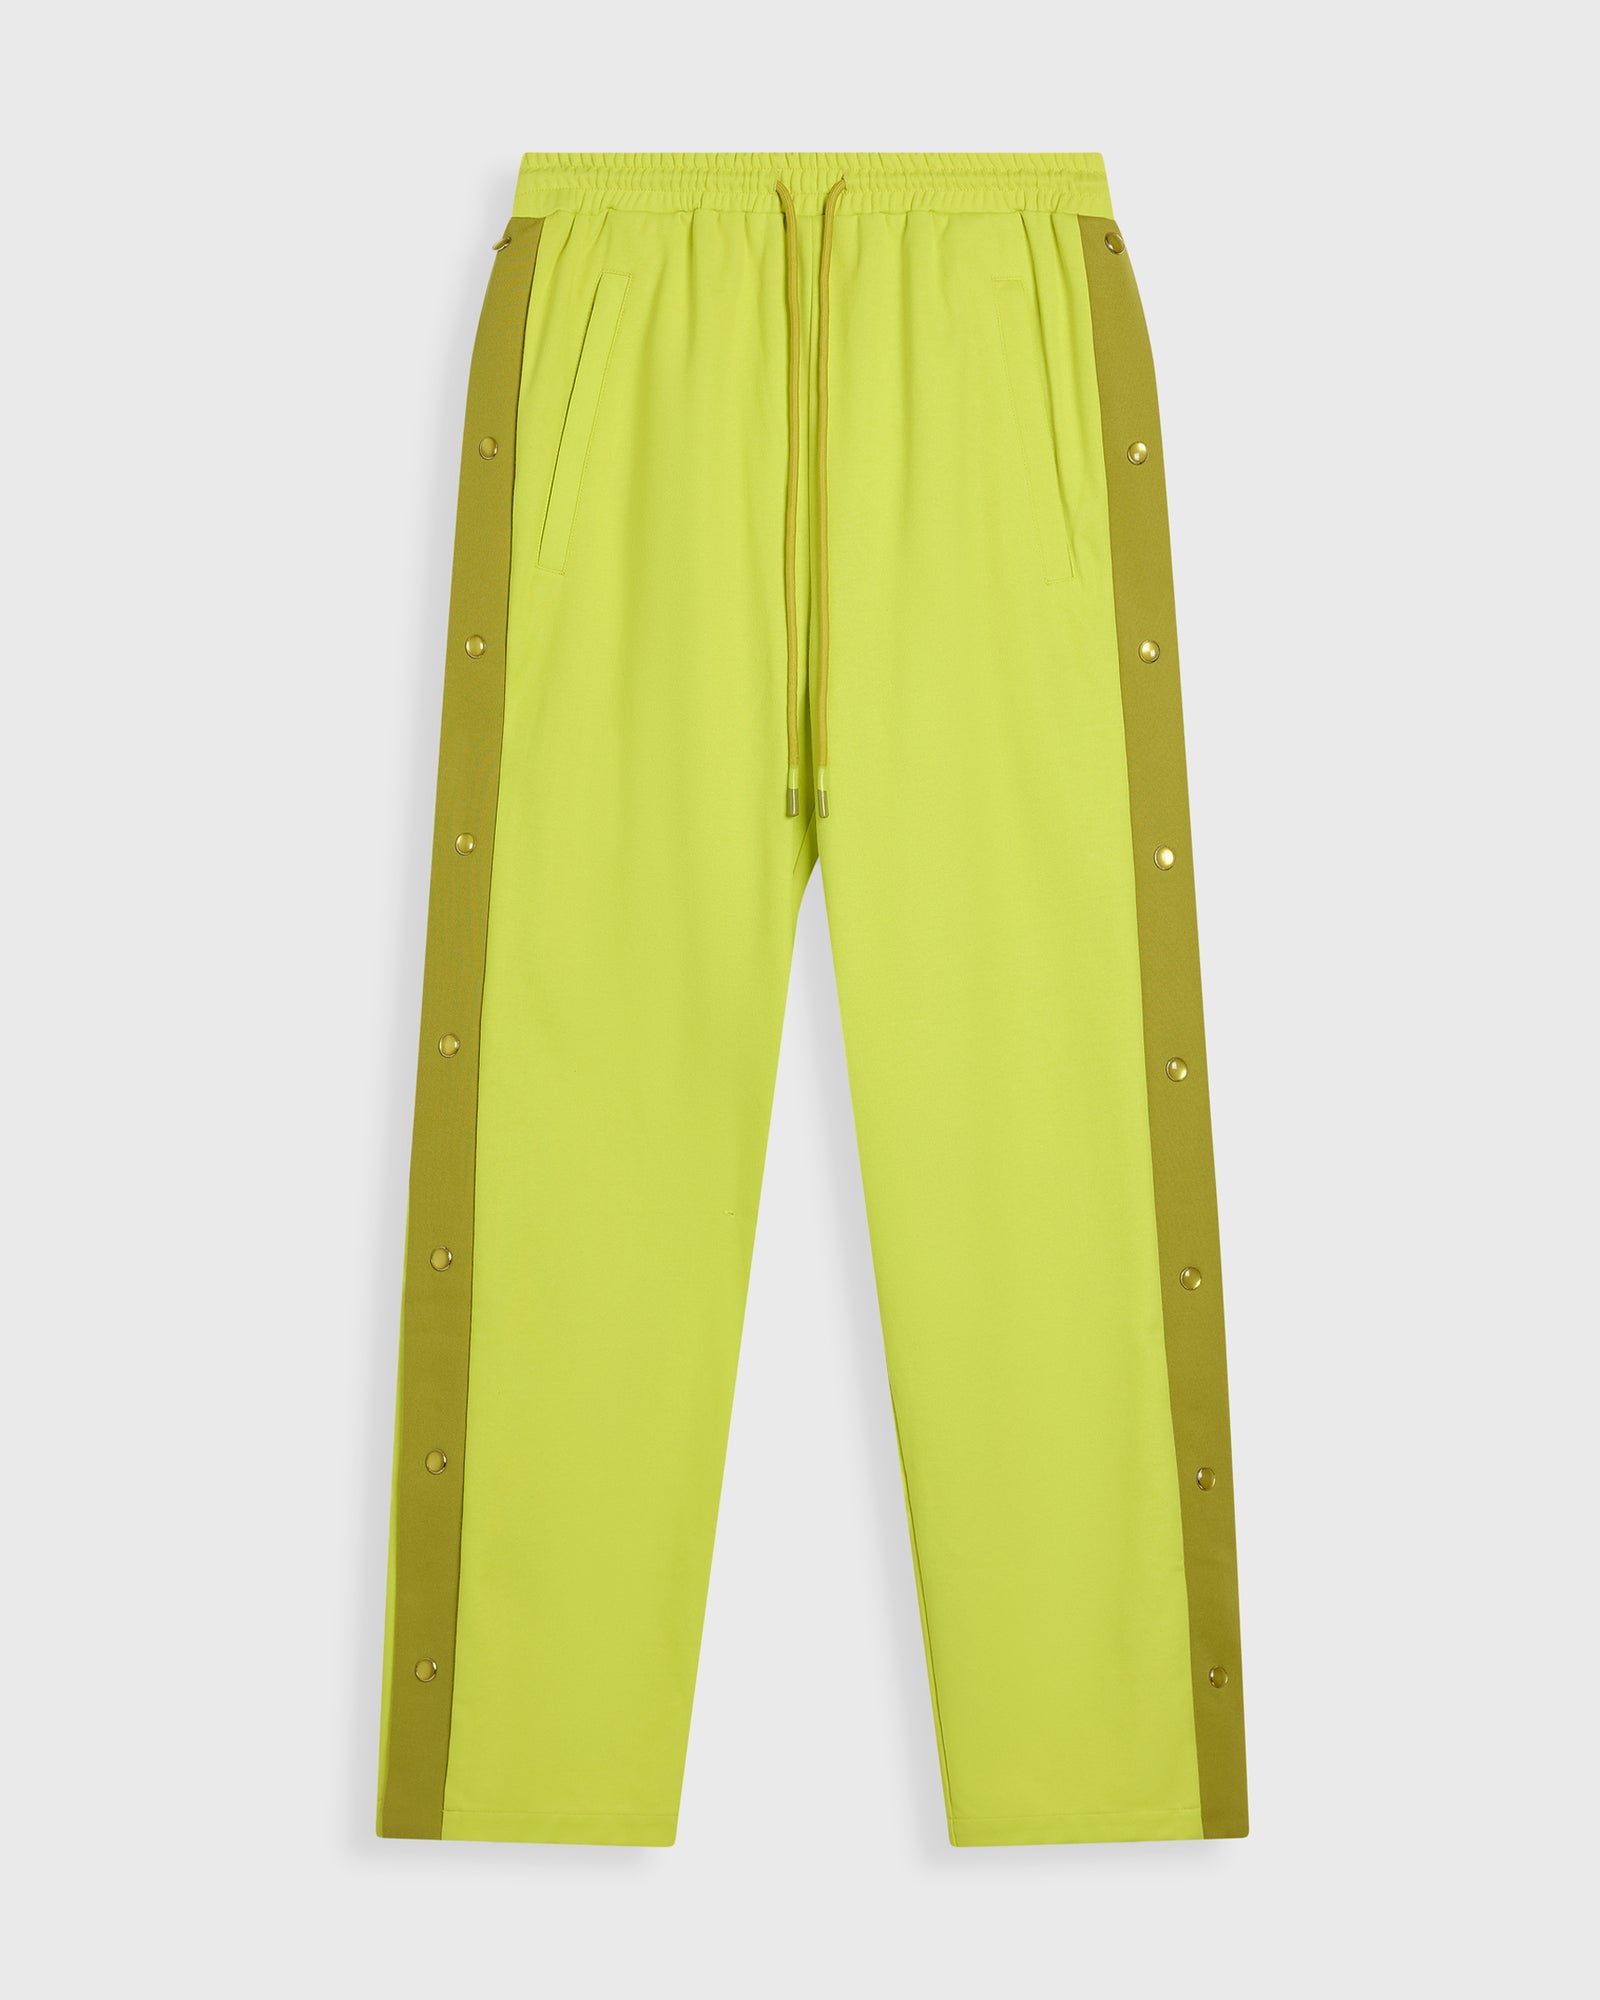 Bright neon yellow hardware deco track pants unisex fit for men & women